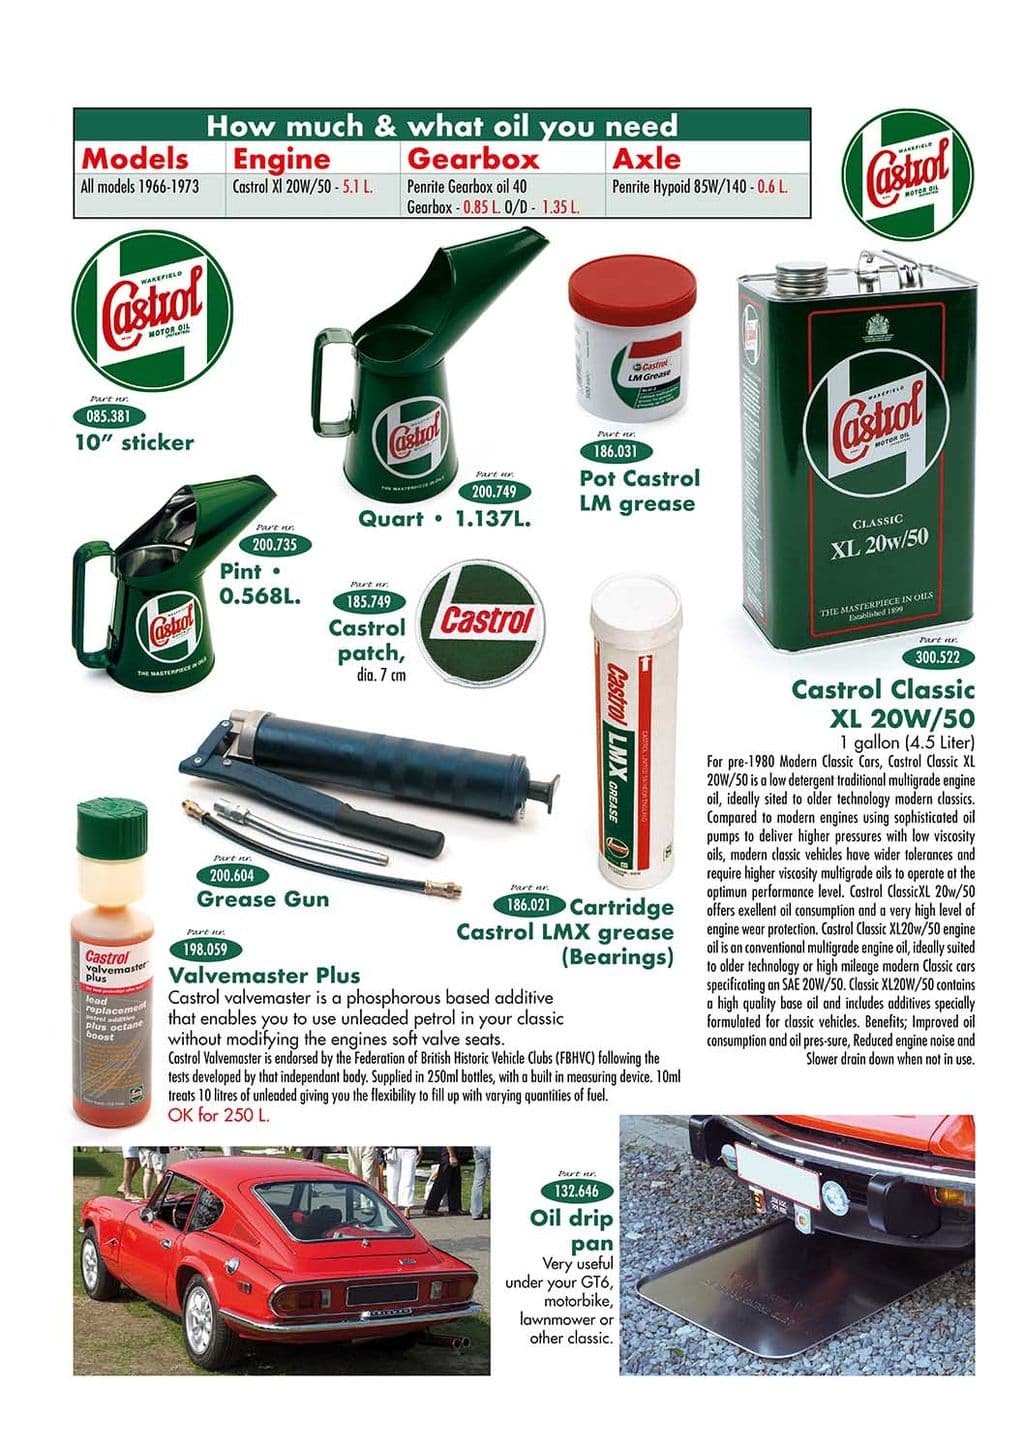 Oil cans & drip pan - bandejas antigoteo - Mantenimiento y almacenamiento - Jaguar XJ6-12 / Daimler Sovereign, D6 1968-'92 - Oil cans & drip pan - 1